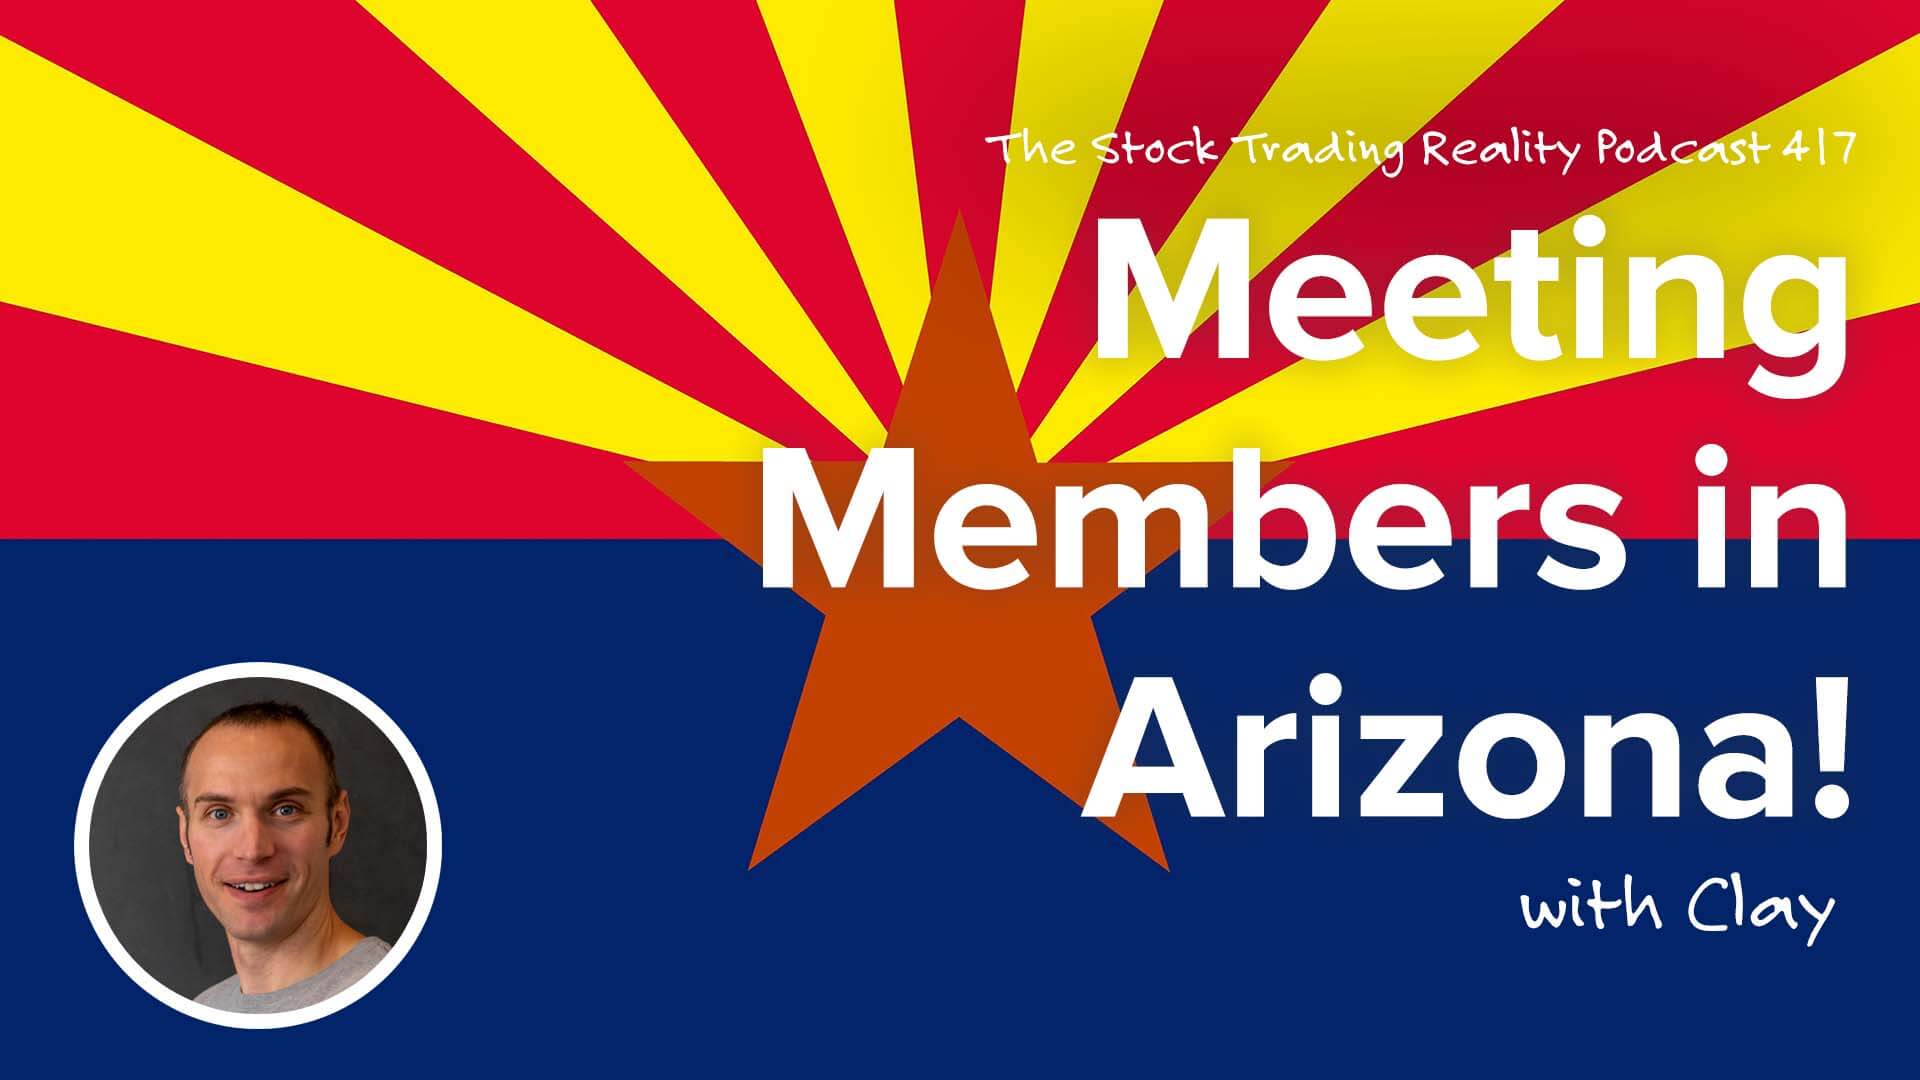 Meeting Members in Arizona! | STR 417